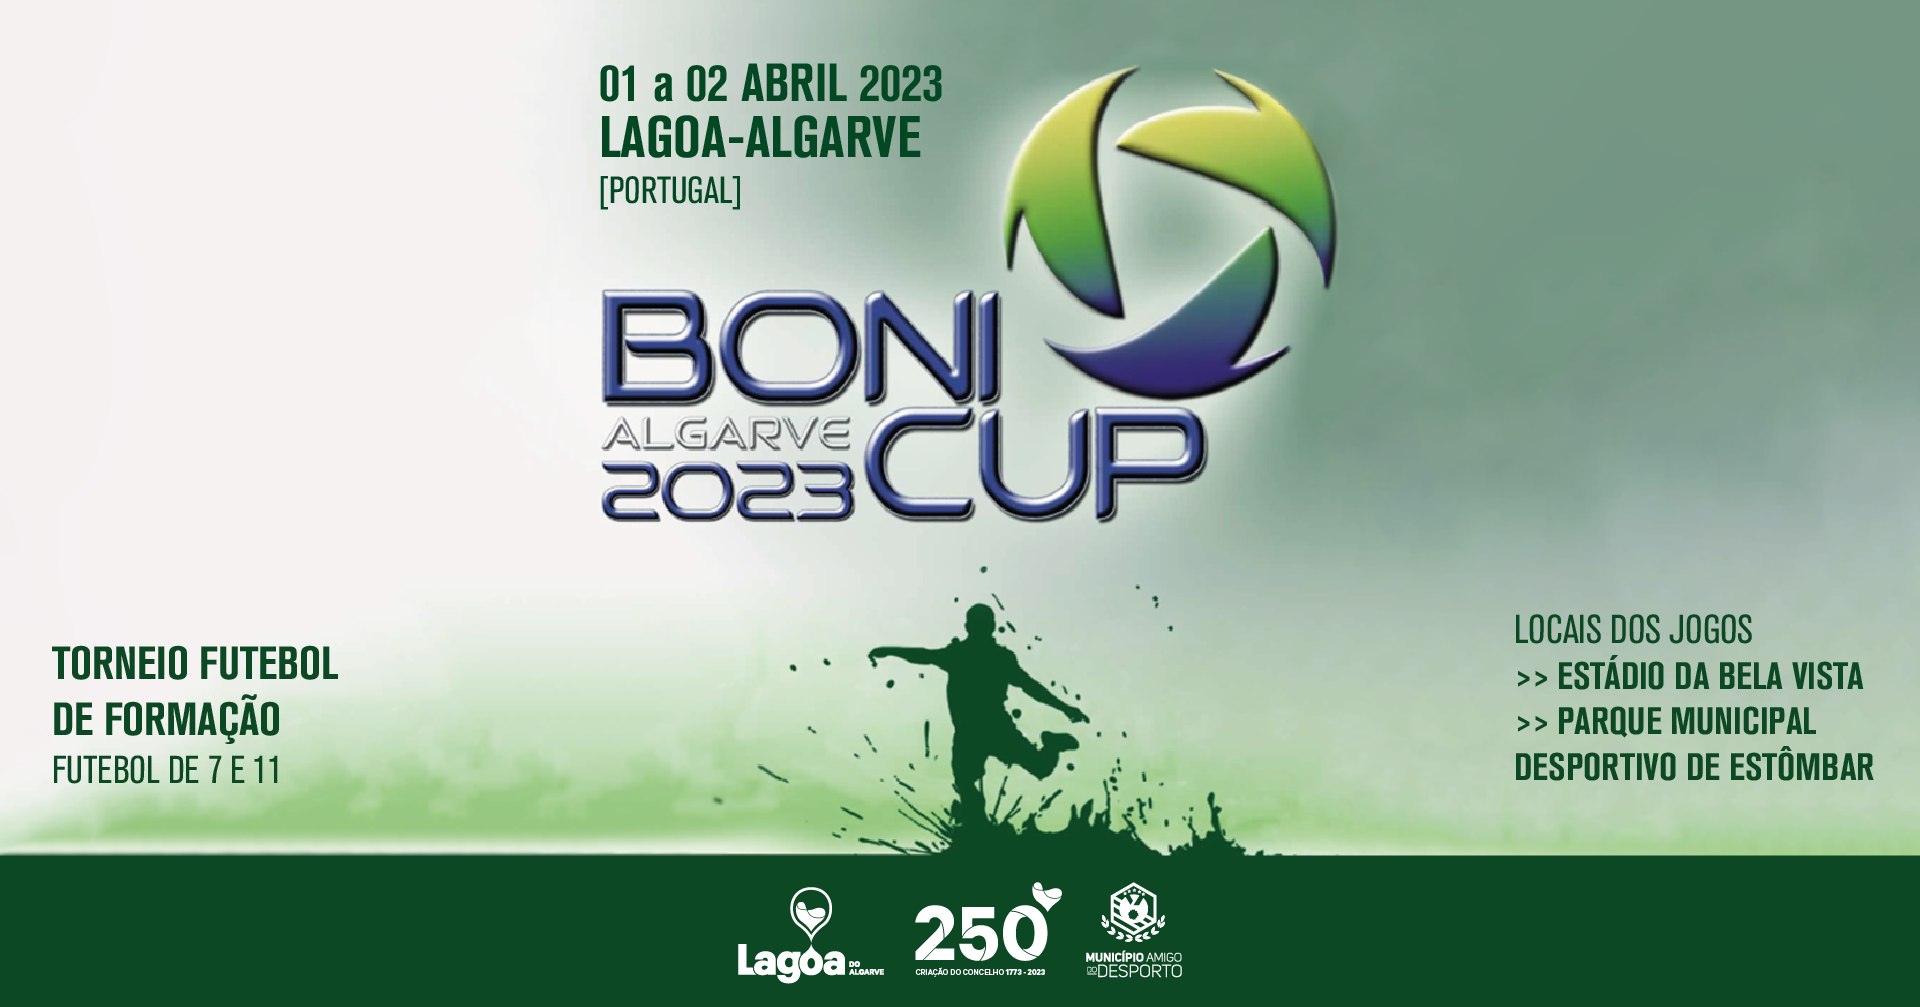 Bonicup 2023